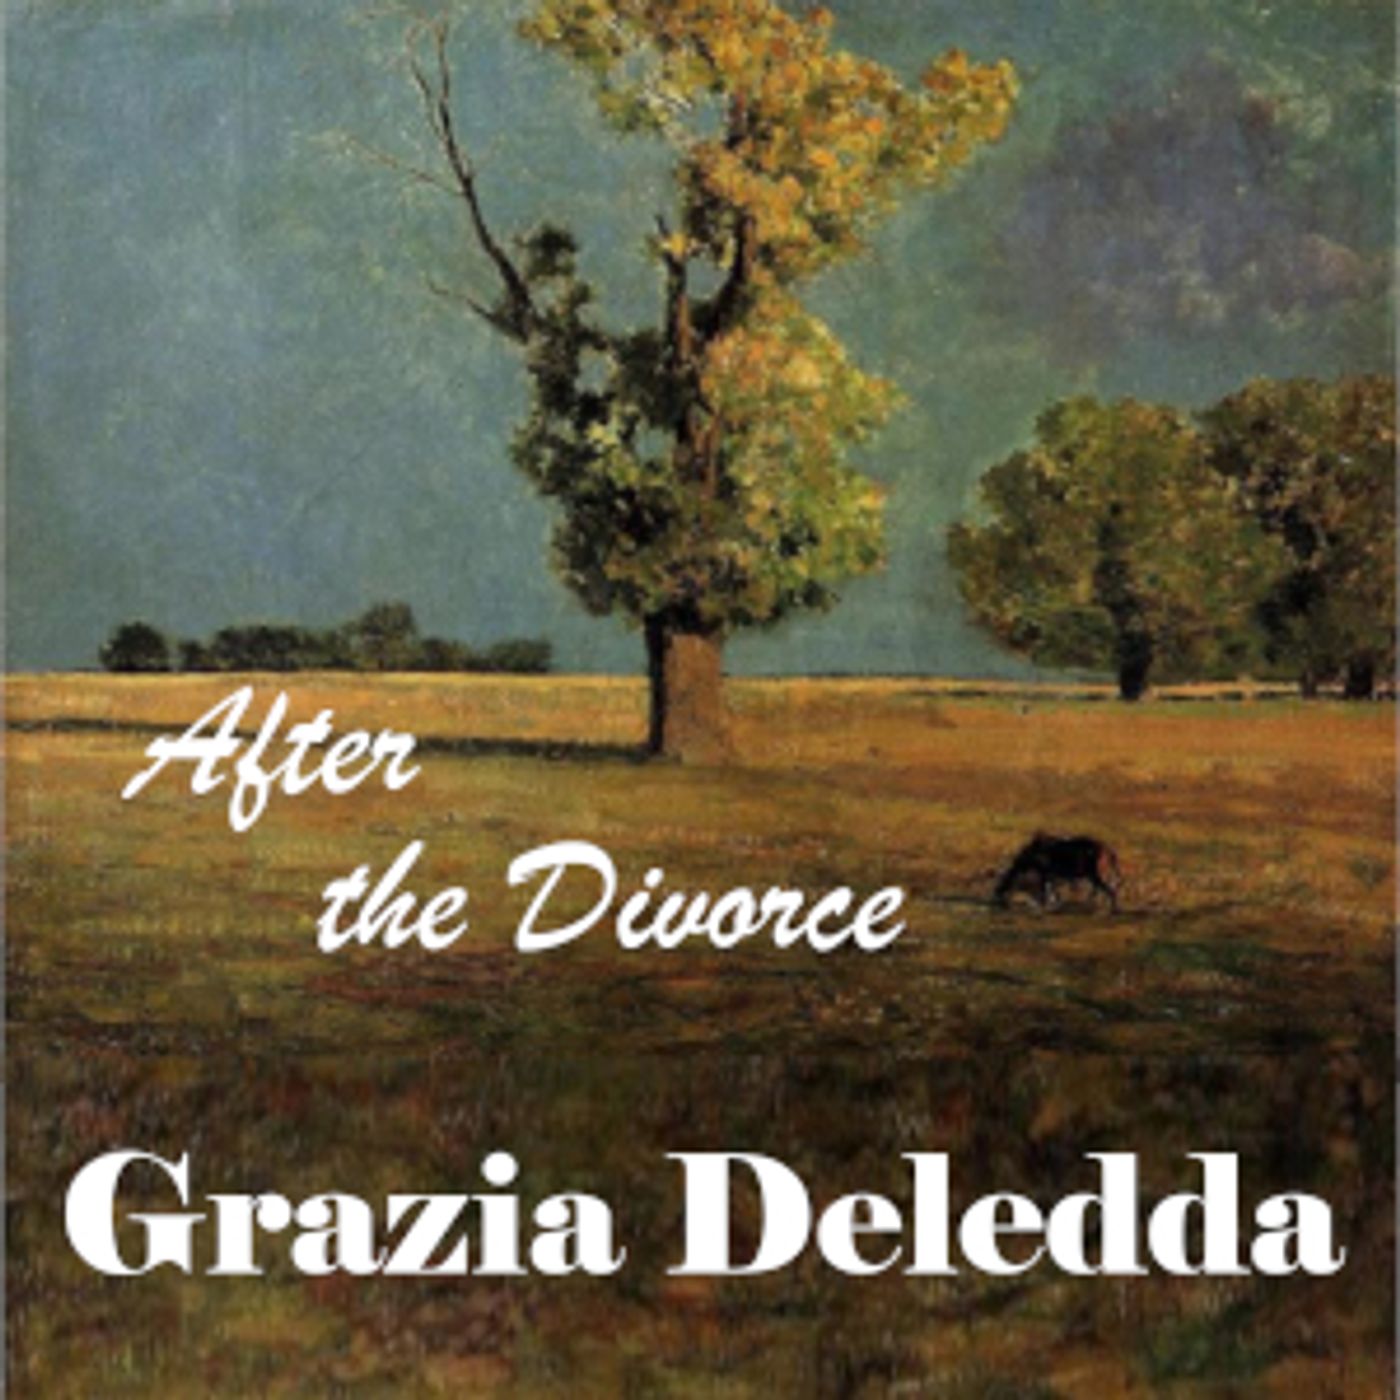 After the Divorce by Grazia Deledda (1871 – 1936)